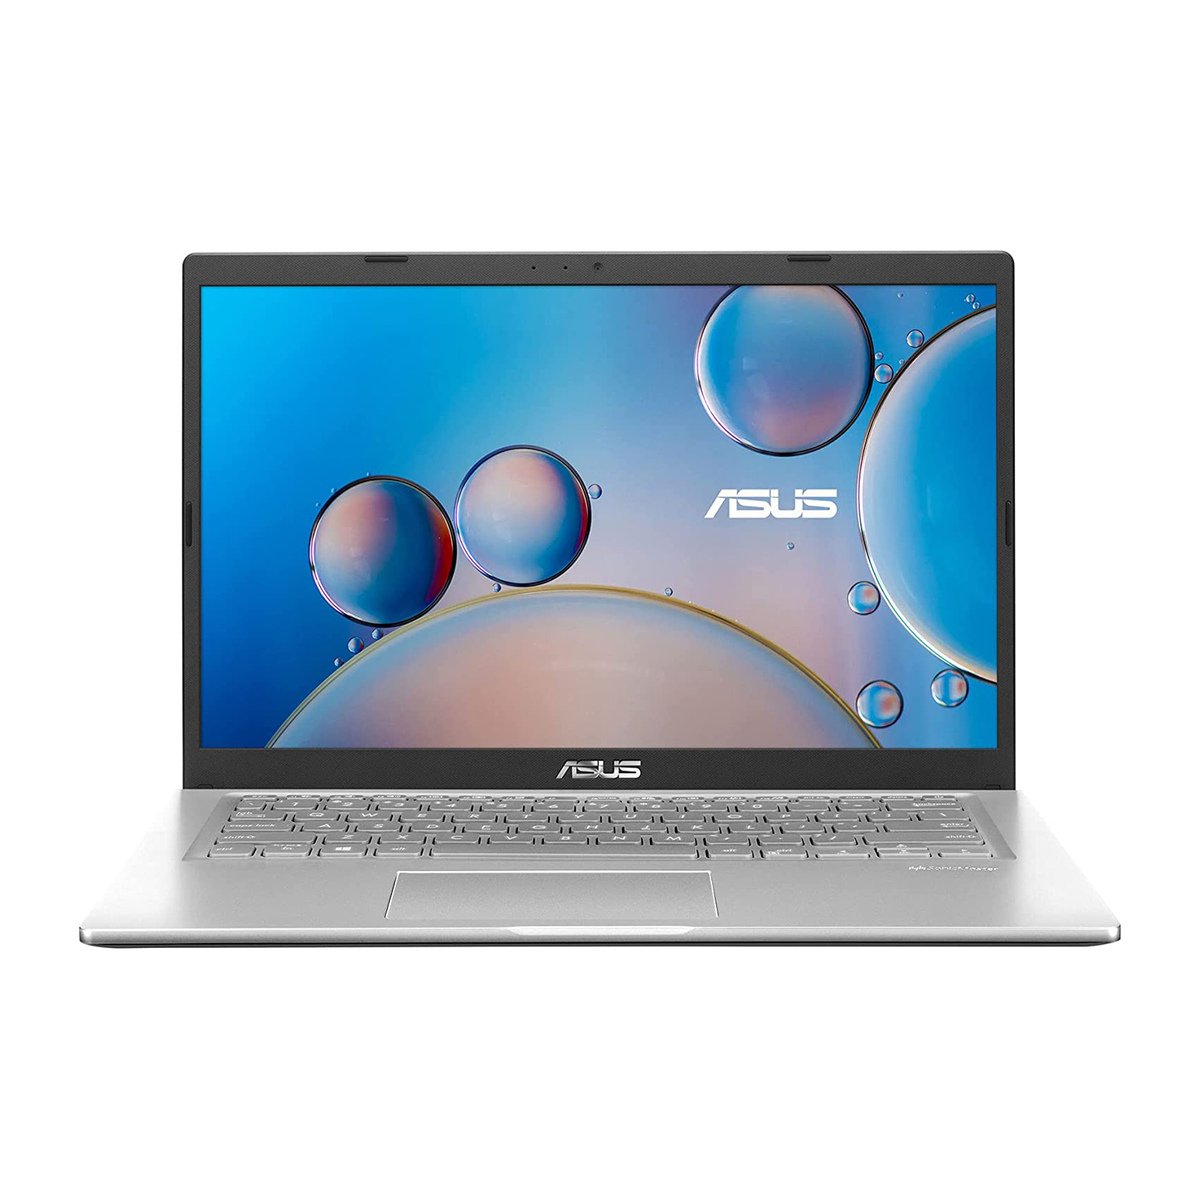 Asus Notebook X415EP-EK081T Intel Core i3 Processor,4GB RAM,512GB SSD,Intel UHD Graphics,14.0inch FHD,Windows 10